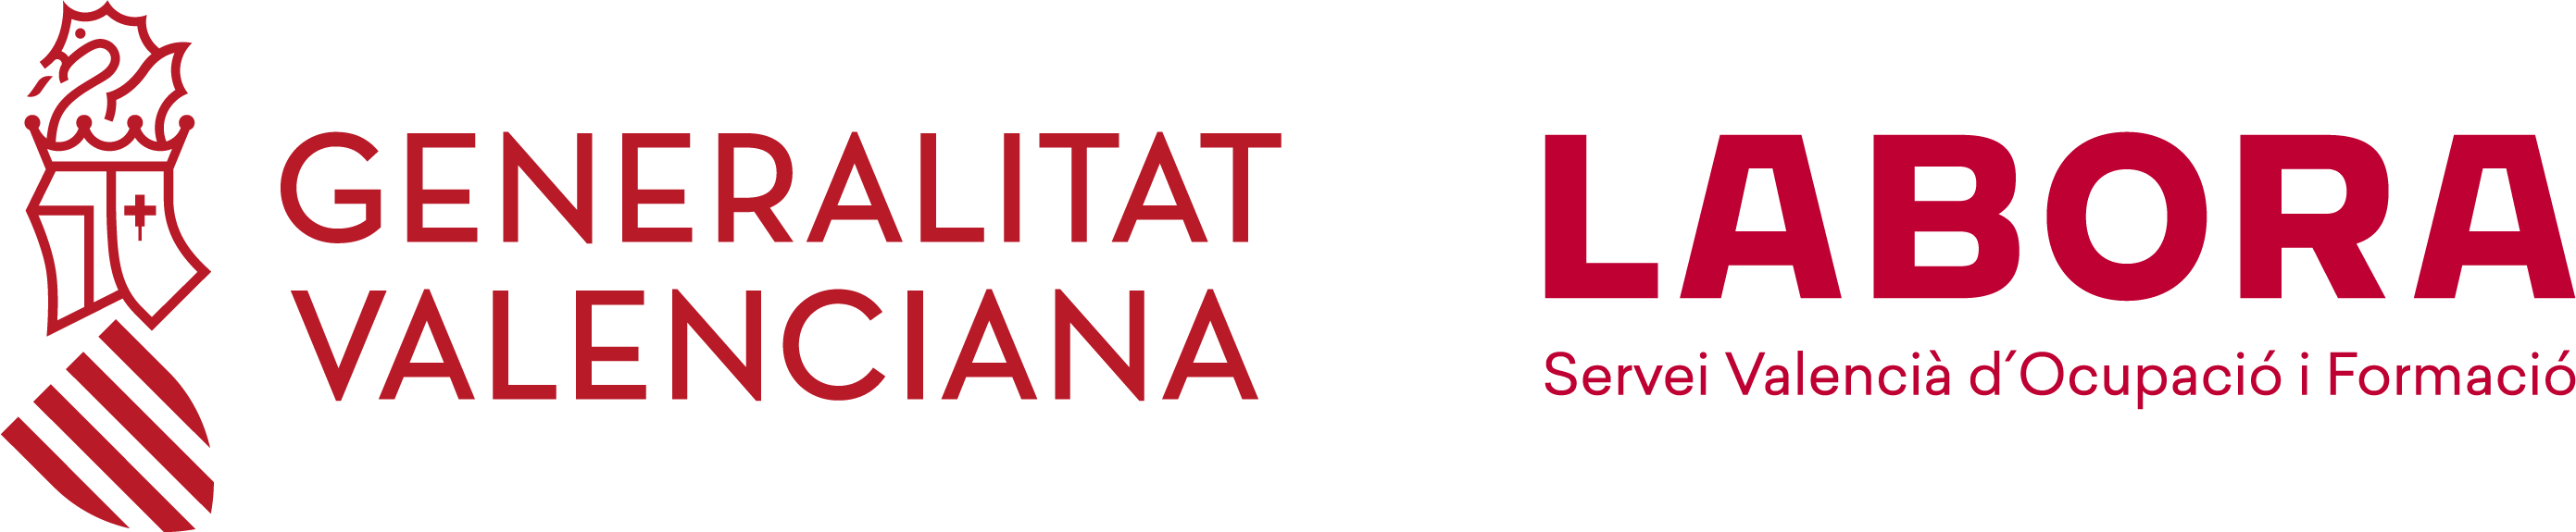 Logos - Generalitat Valenciana